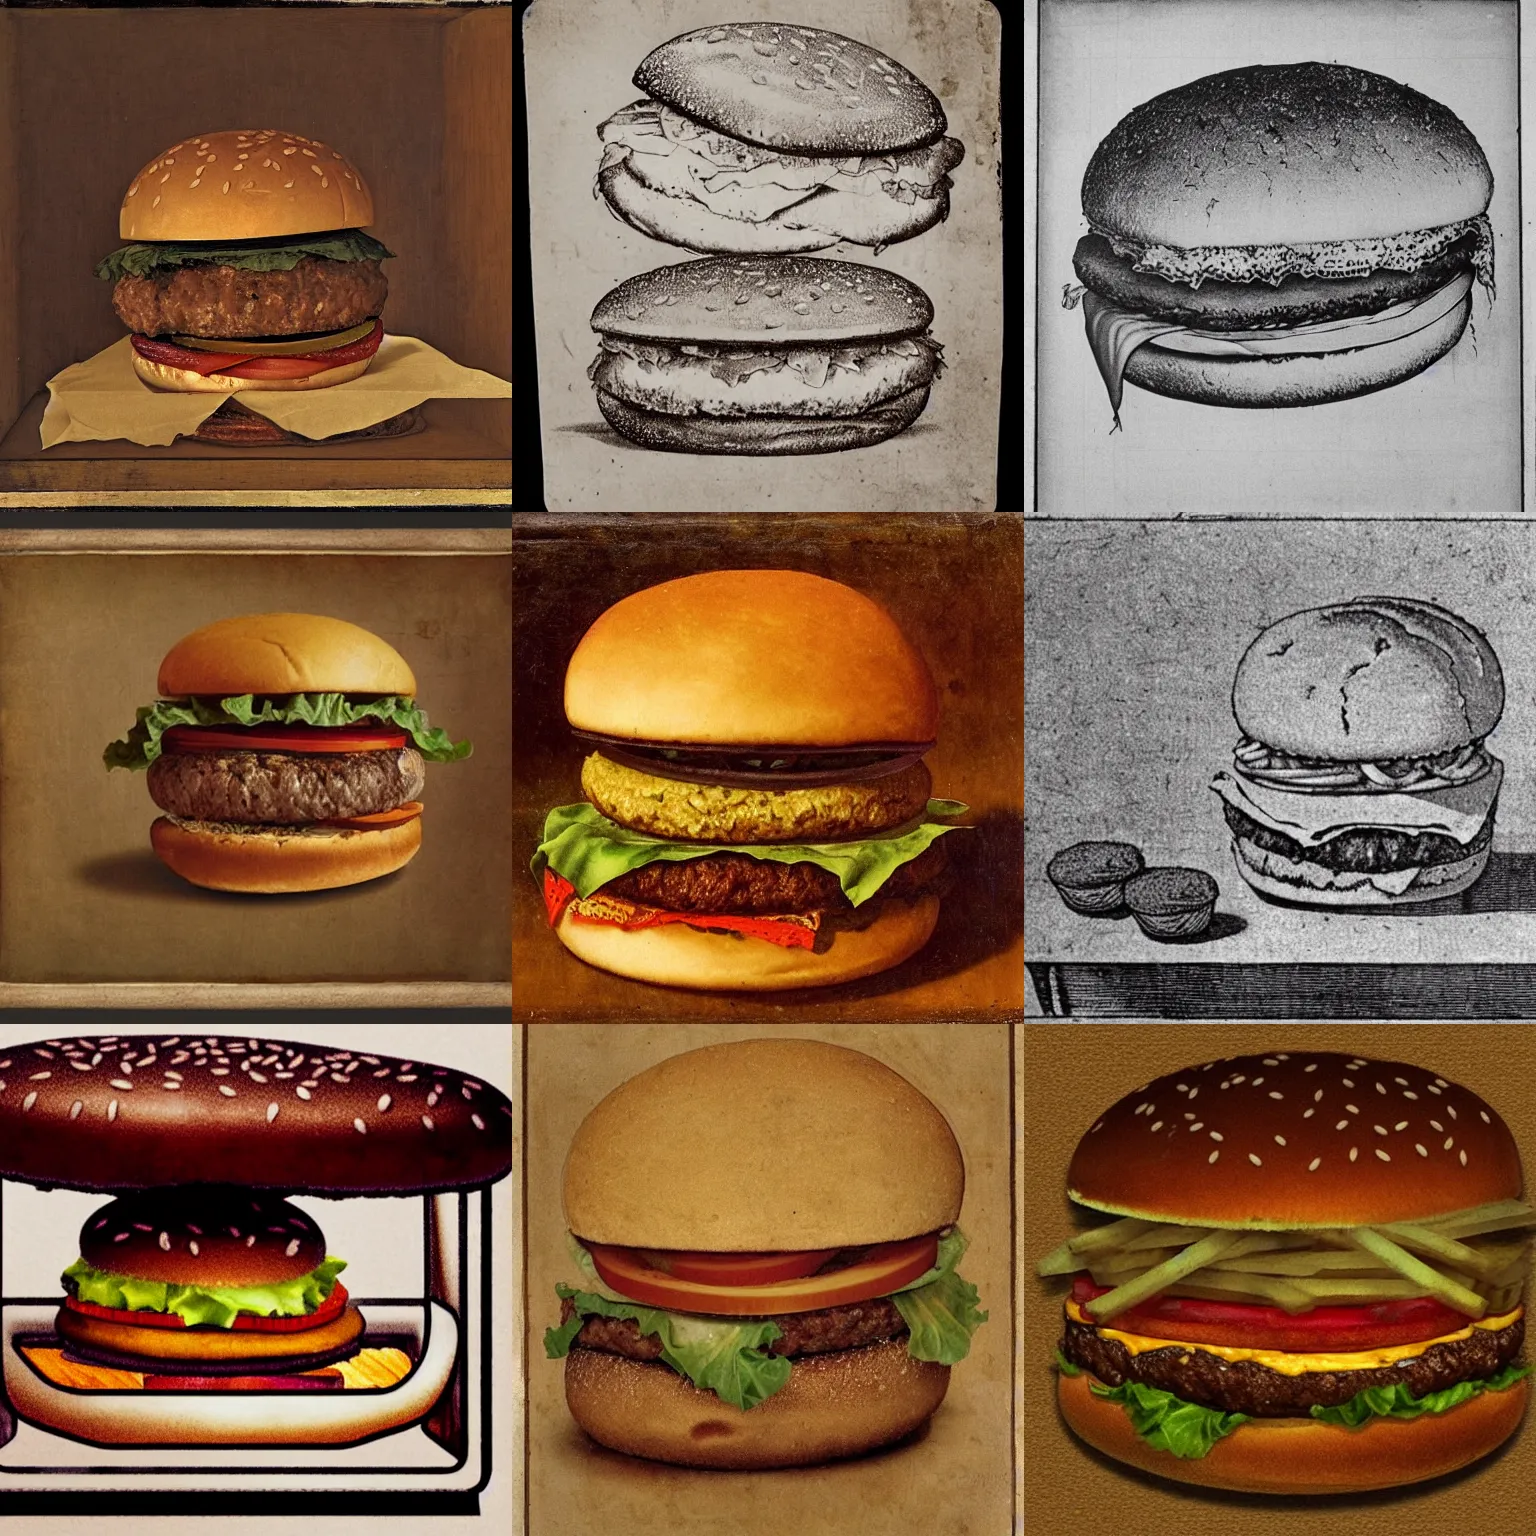 Prompt: an hamburger drawn by da vinci